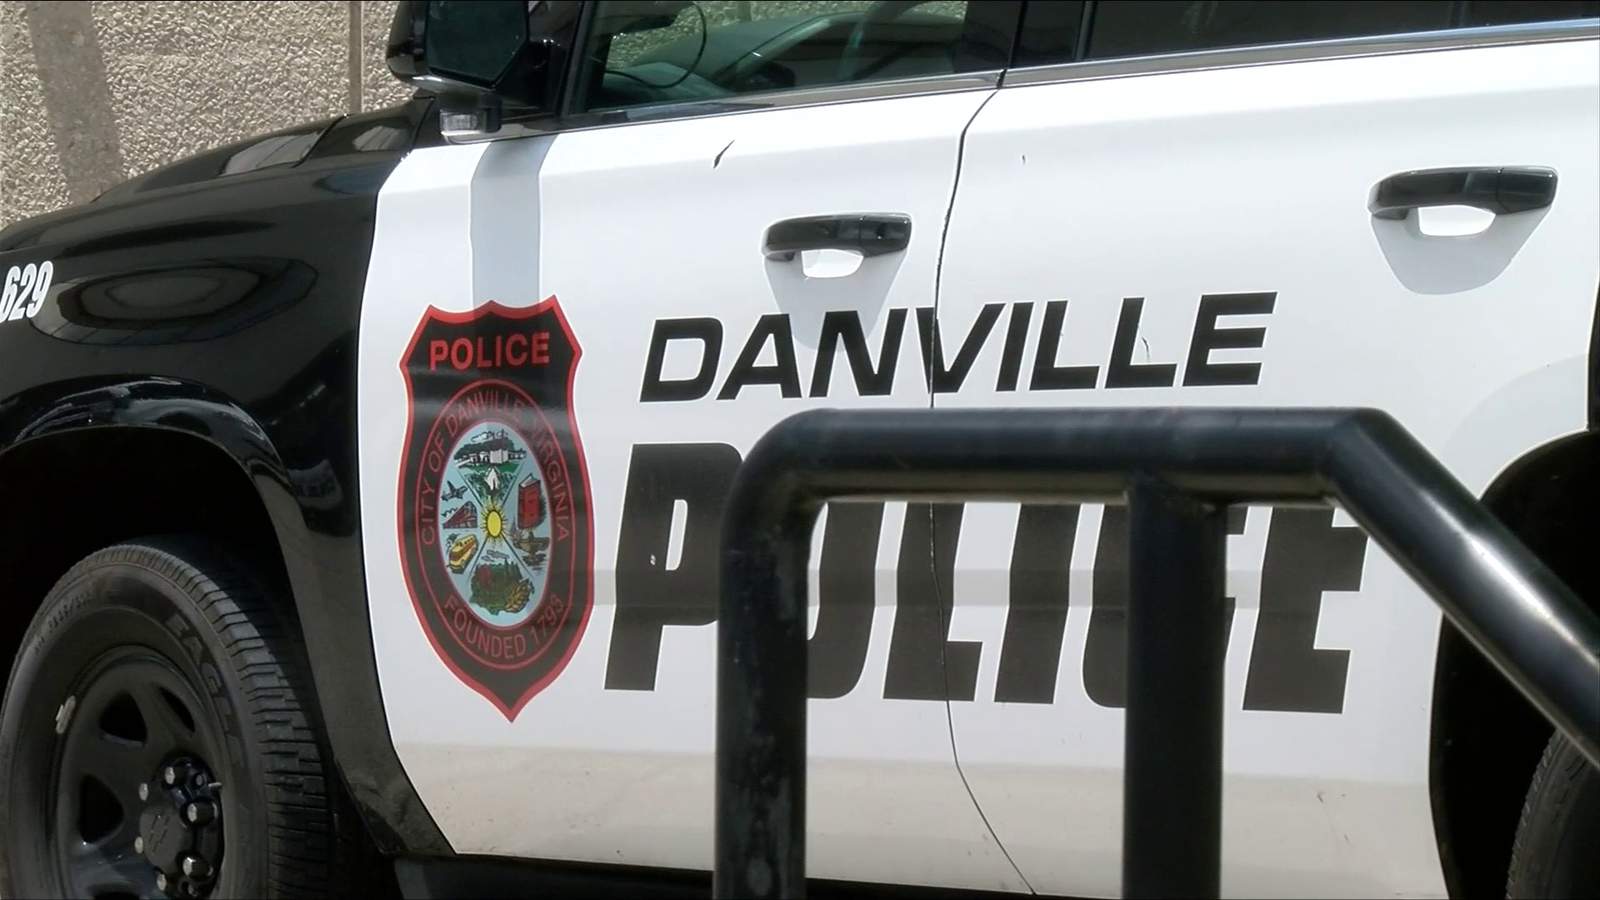 Increased communication helping Danville police investigate drug overdoses